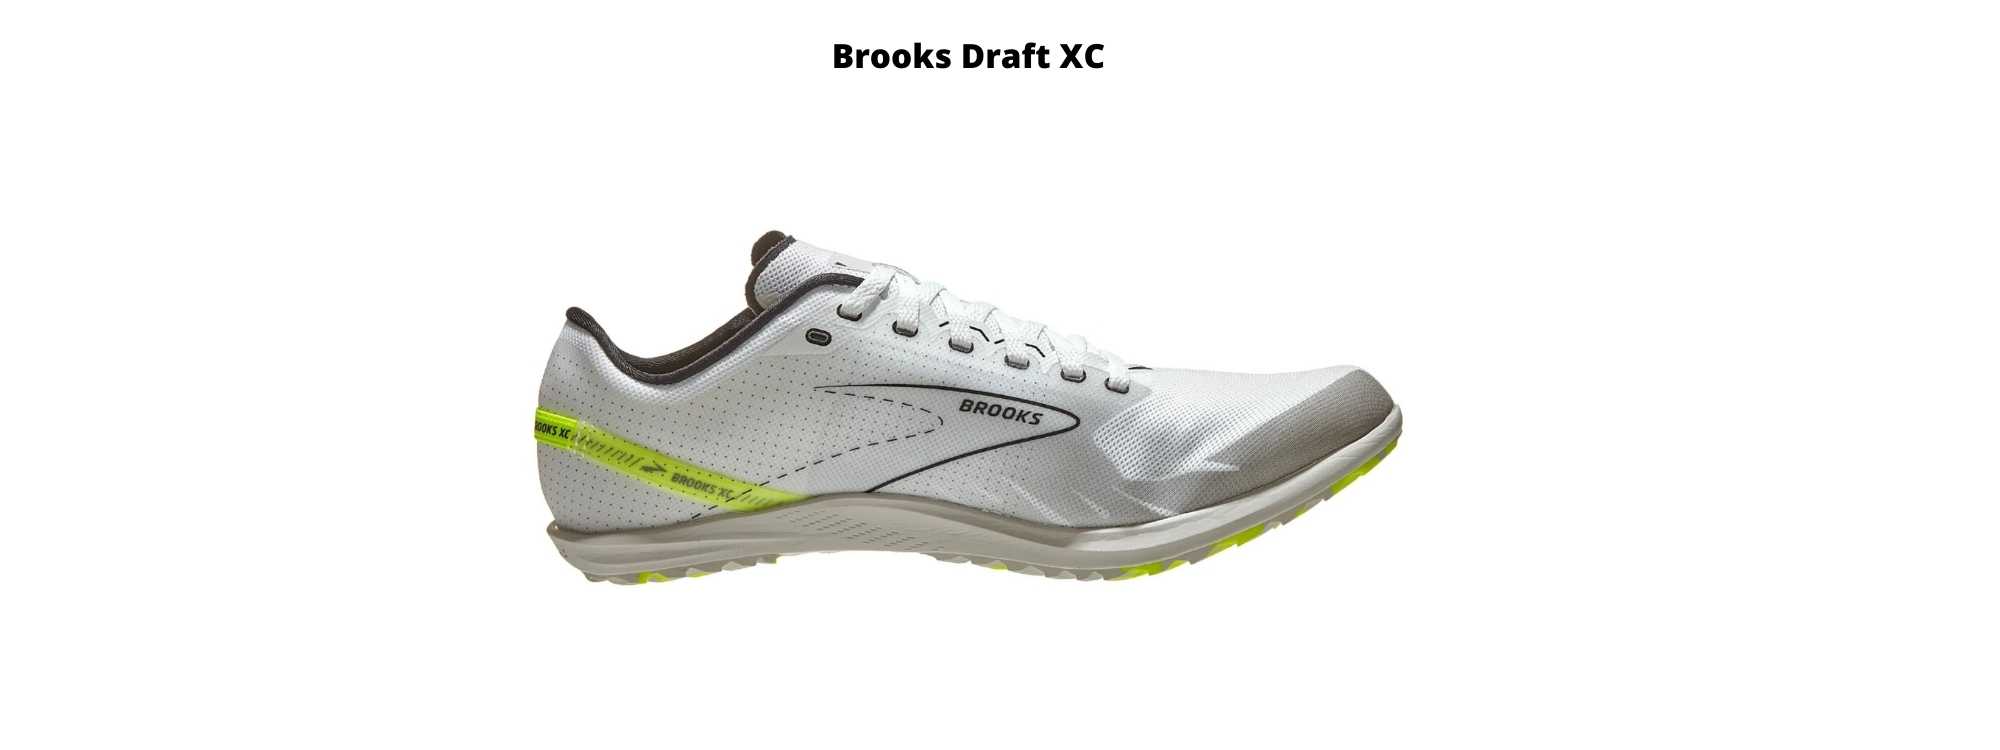 Brooks Draft XC can be found in Kansas City at TRWS